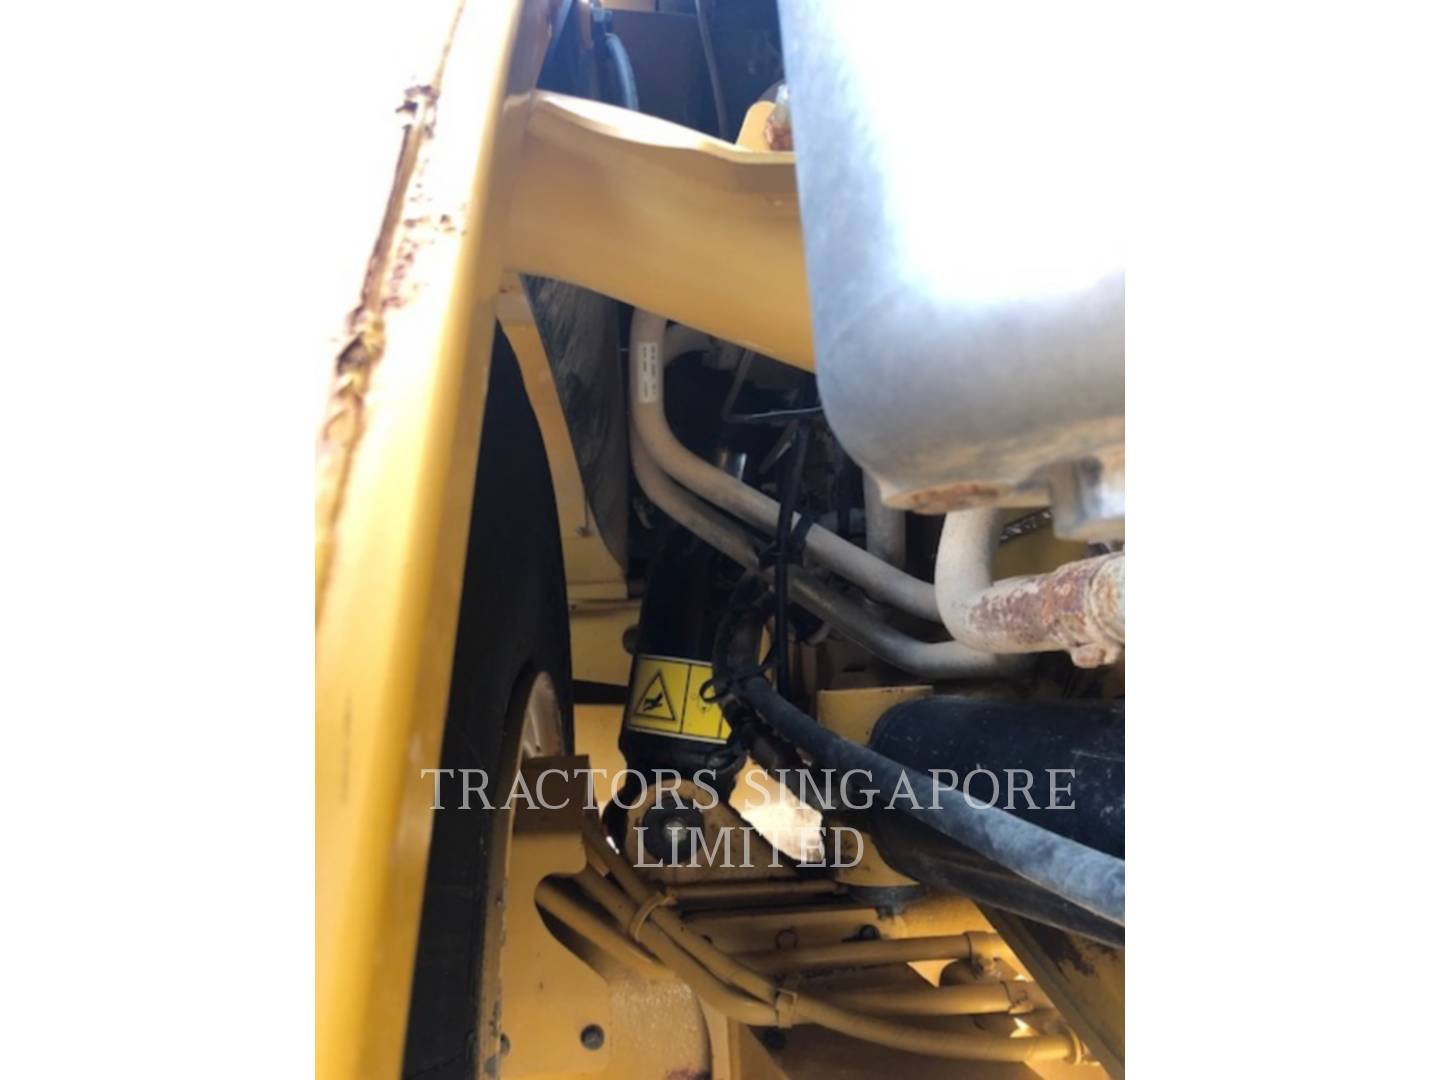 wtk?JHNyYz05MTVkOGJkOWI3MzgxYzNkZmI2NDA1ZTQxZTUxYmViMiYkdHh0PVRSQUNUT1JTJTIwU0lOR0FQT1JFJTIwTElNSVRFRCY5NDAw 745C | Tractors Singapore